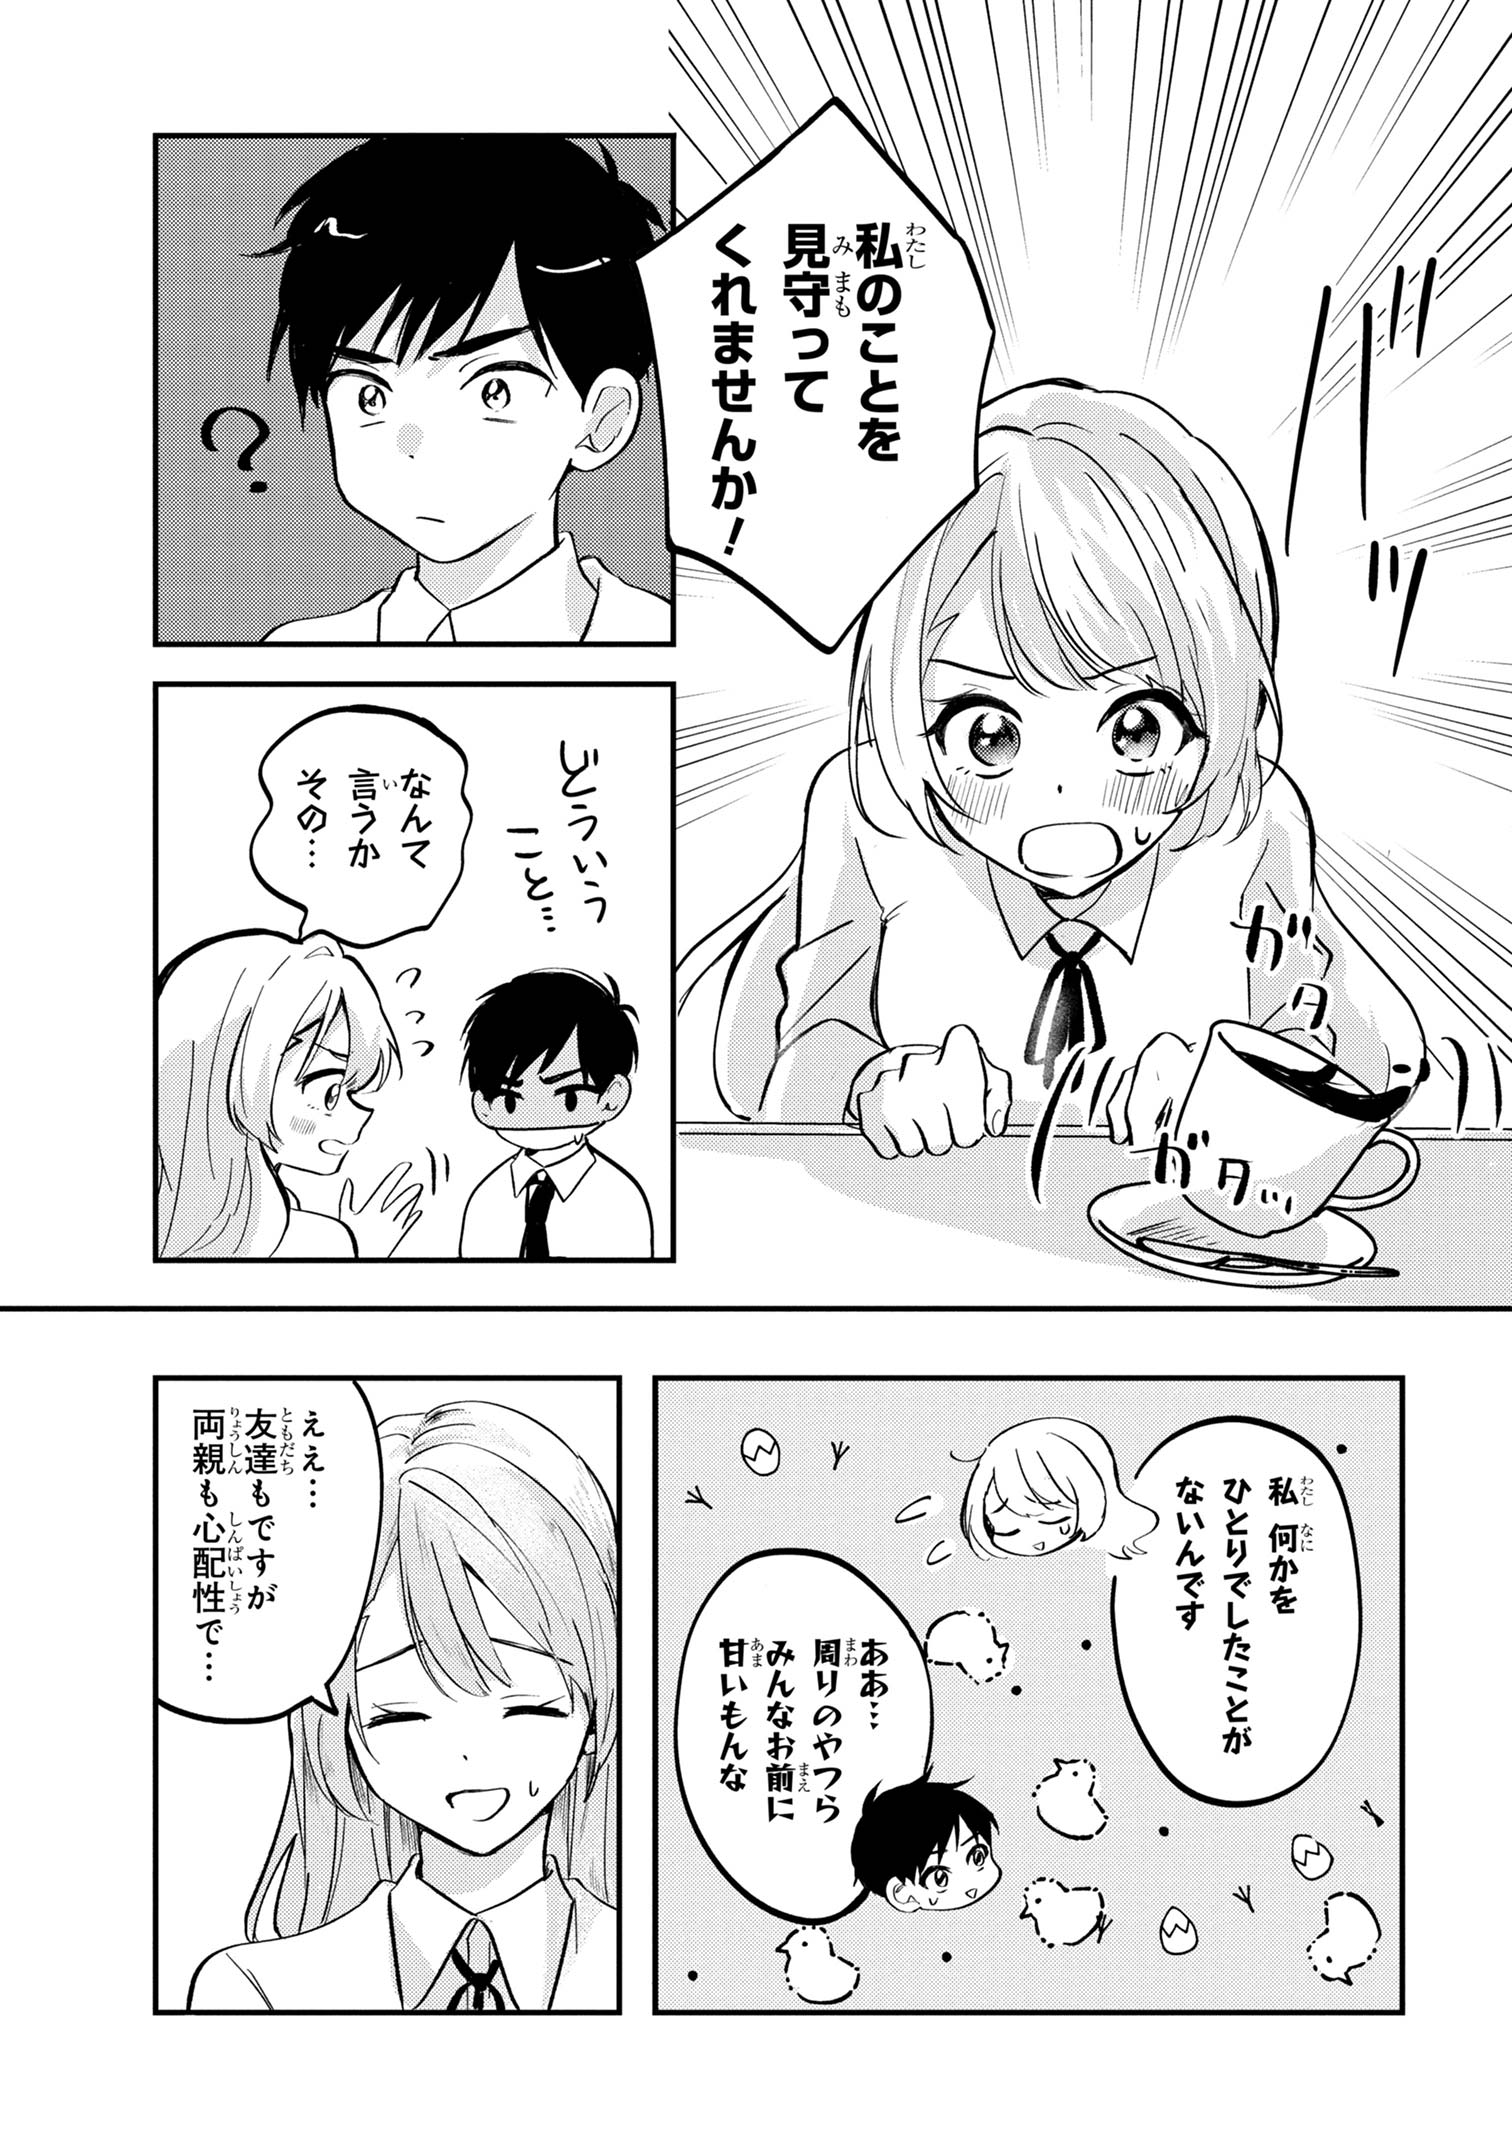 Aisare Tenshi na Classmate ga, Ore ni Dake Itazura ni Hohoemu - Chapter 1 - Page 32